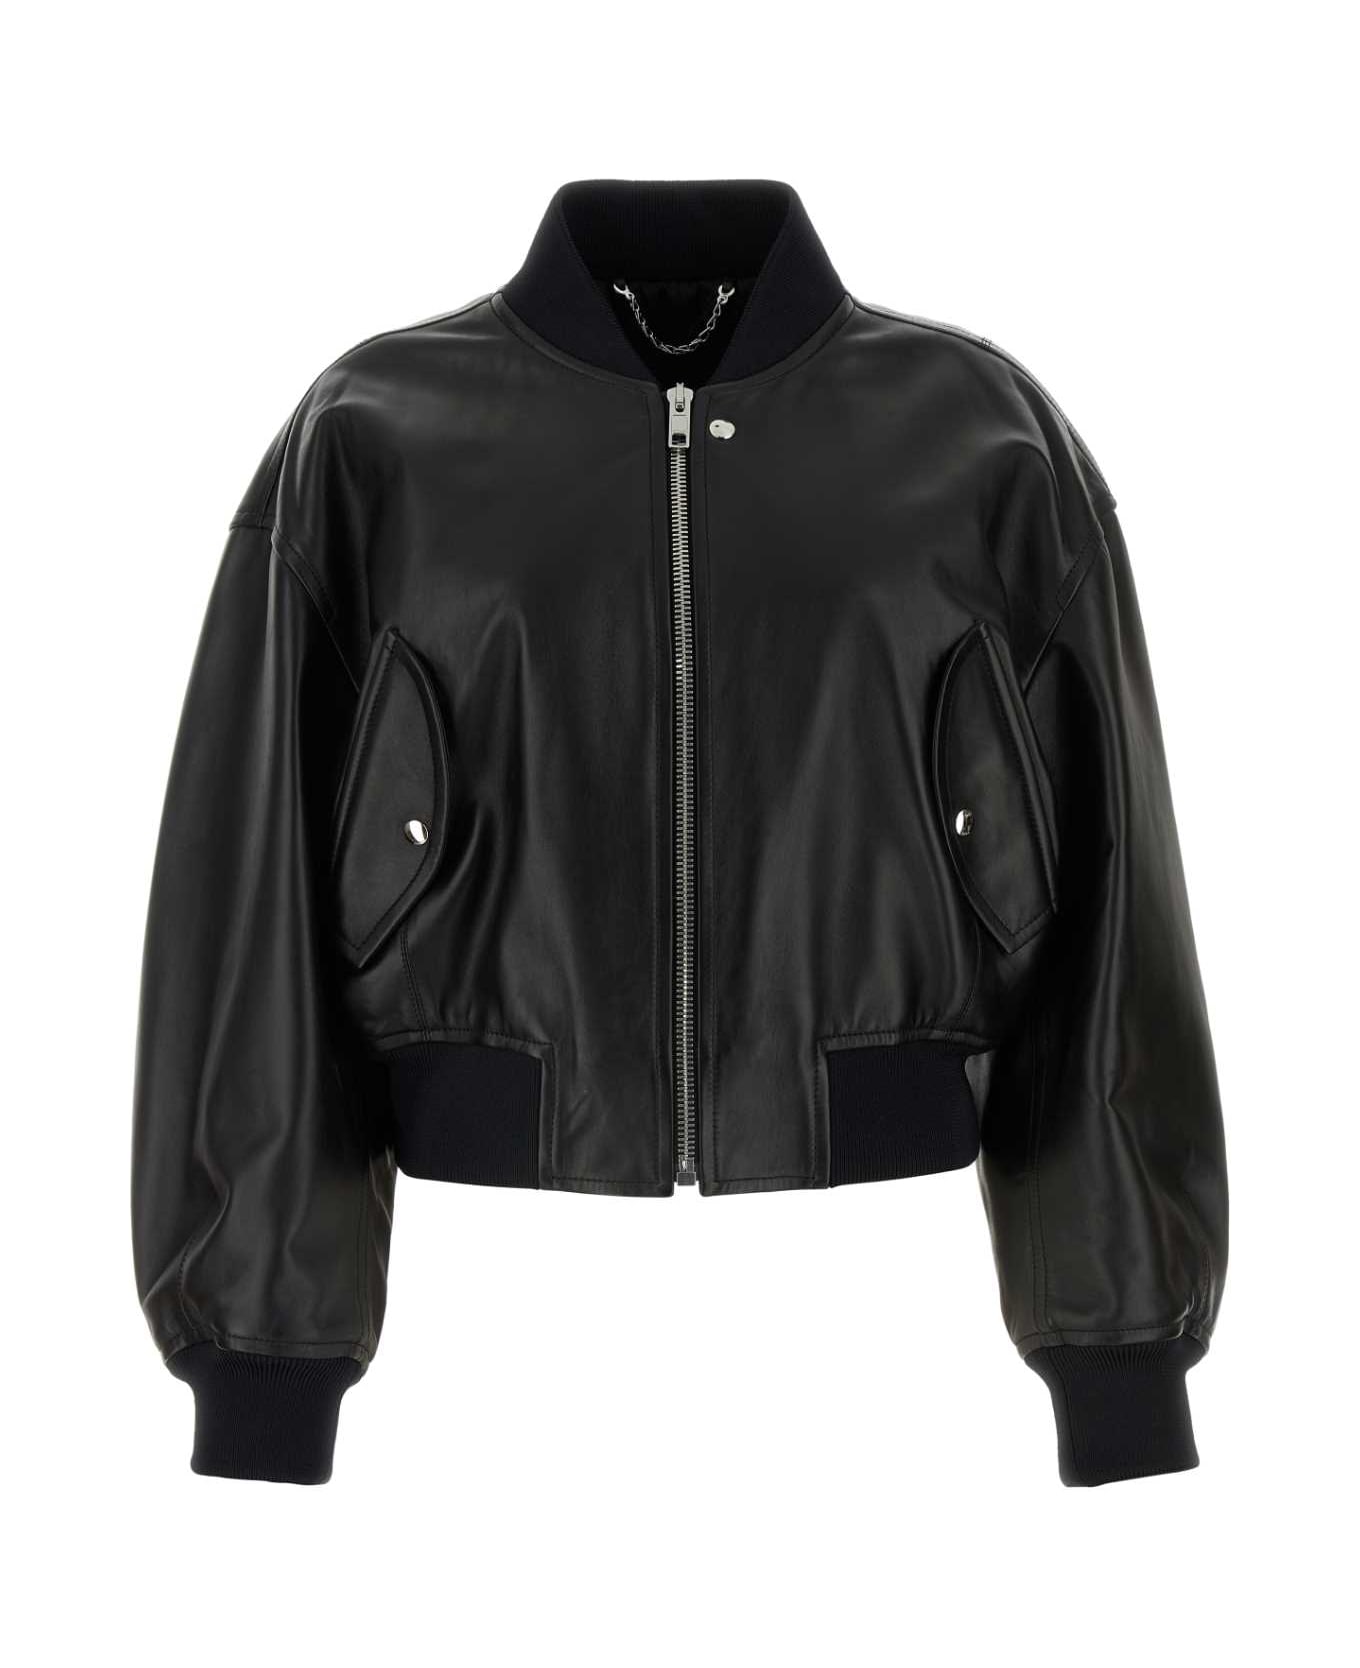 Gucci Black Leather Bomber Jacket - Black ジャケット